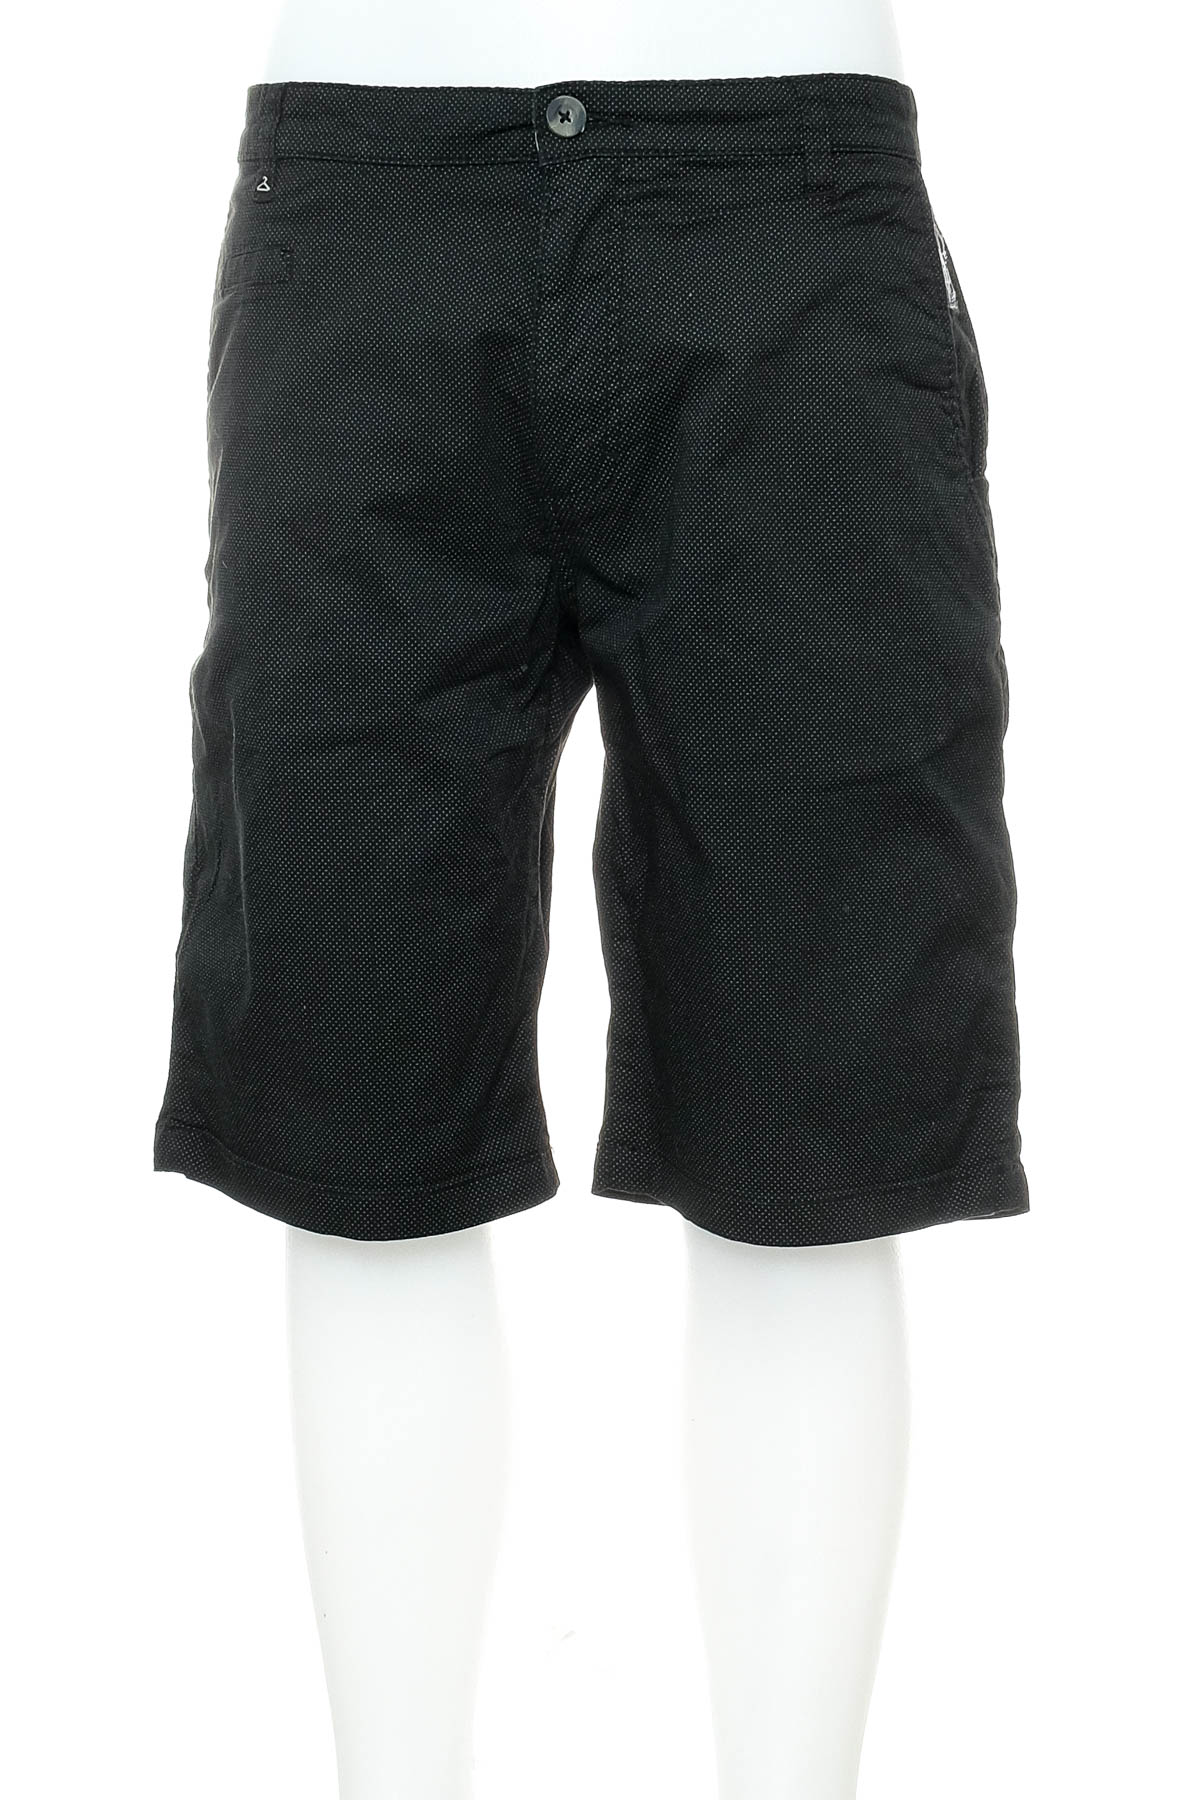 Men's shorts - Berna - 0